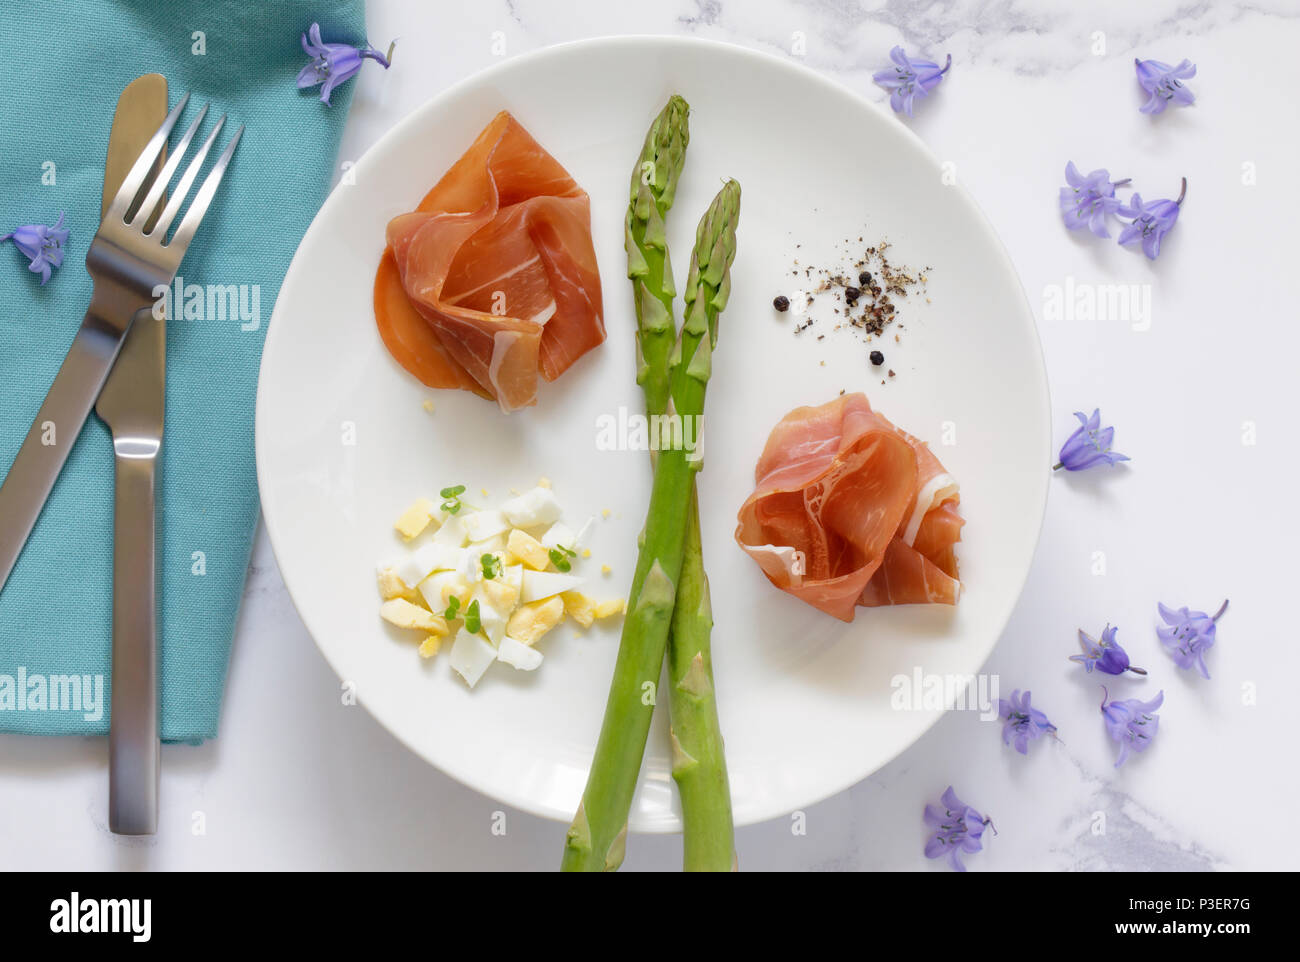 New Season Asparagus, Prosciutto Ham and Eggs, Spring Food Still-life Stock Photo